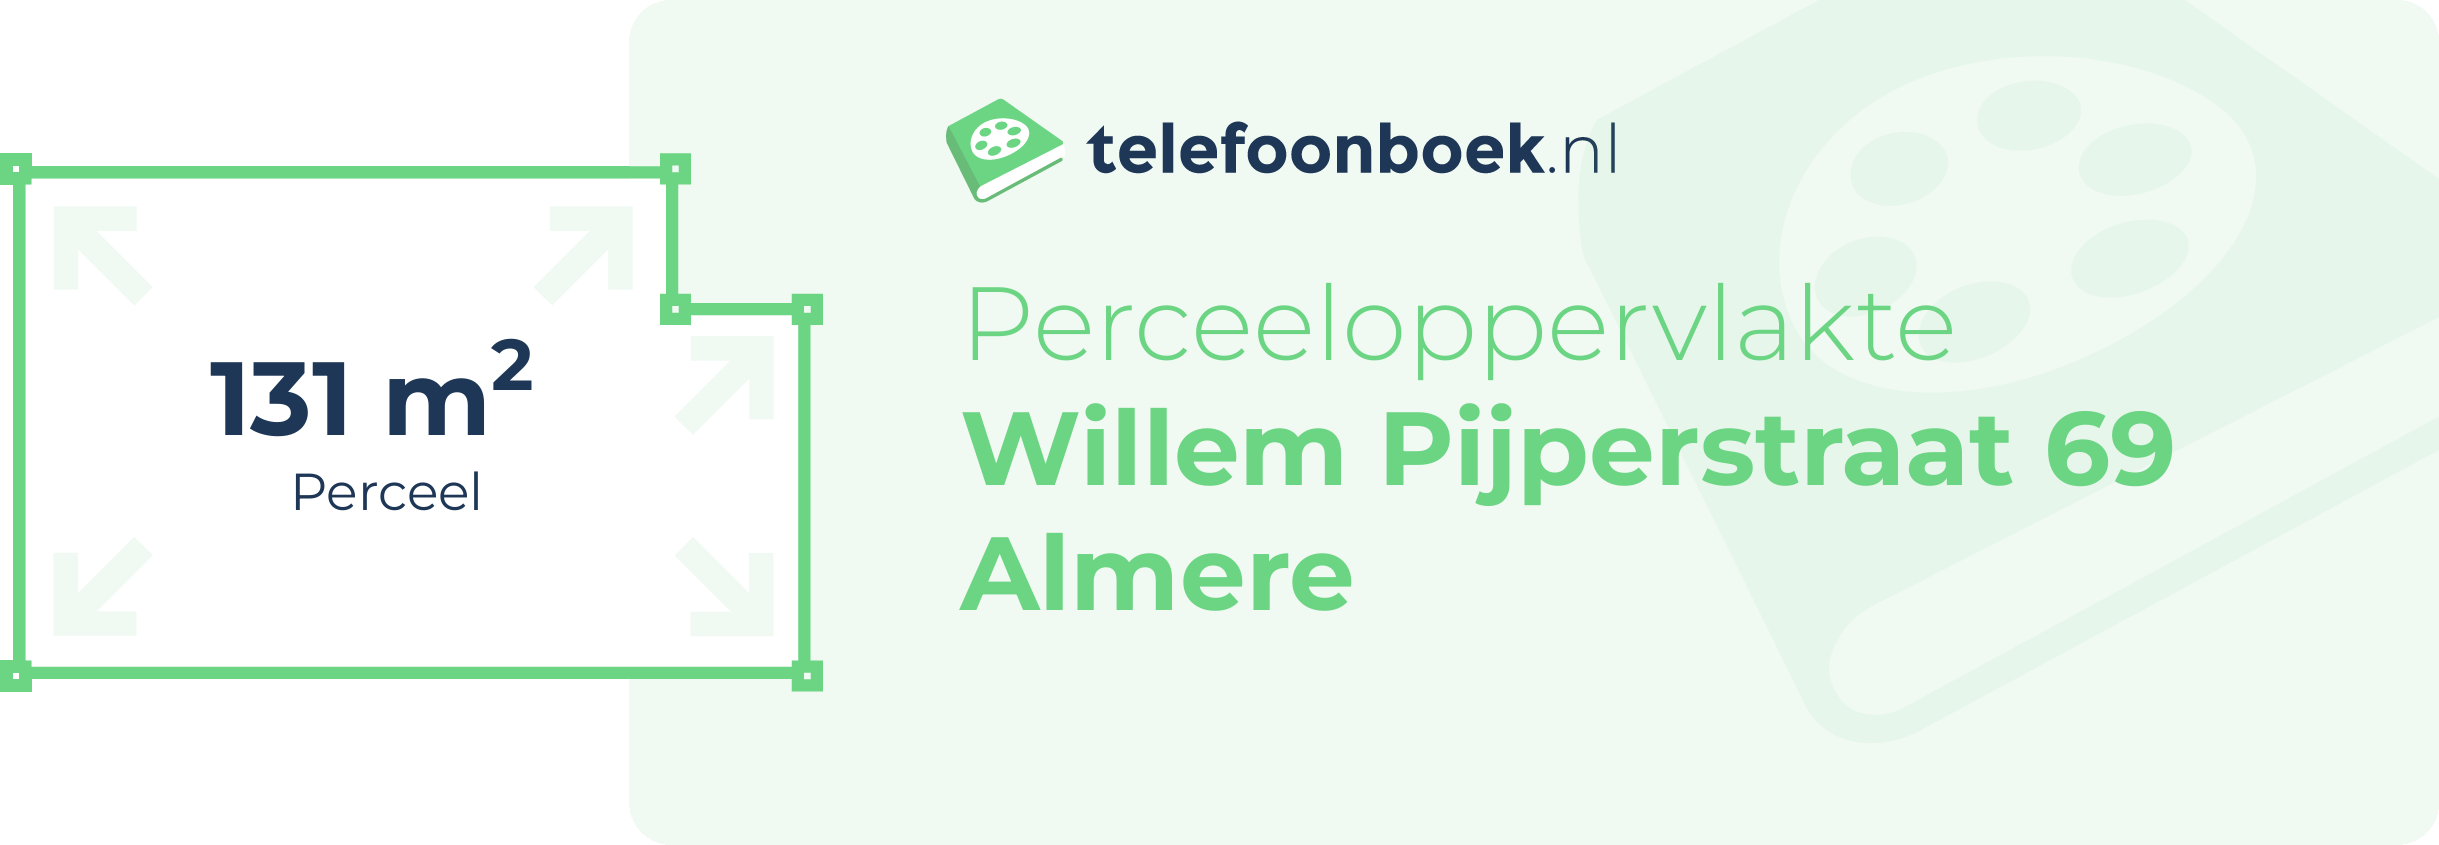 Perceeloppervlakte Willem Pijperstraat 69 Almere